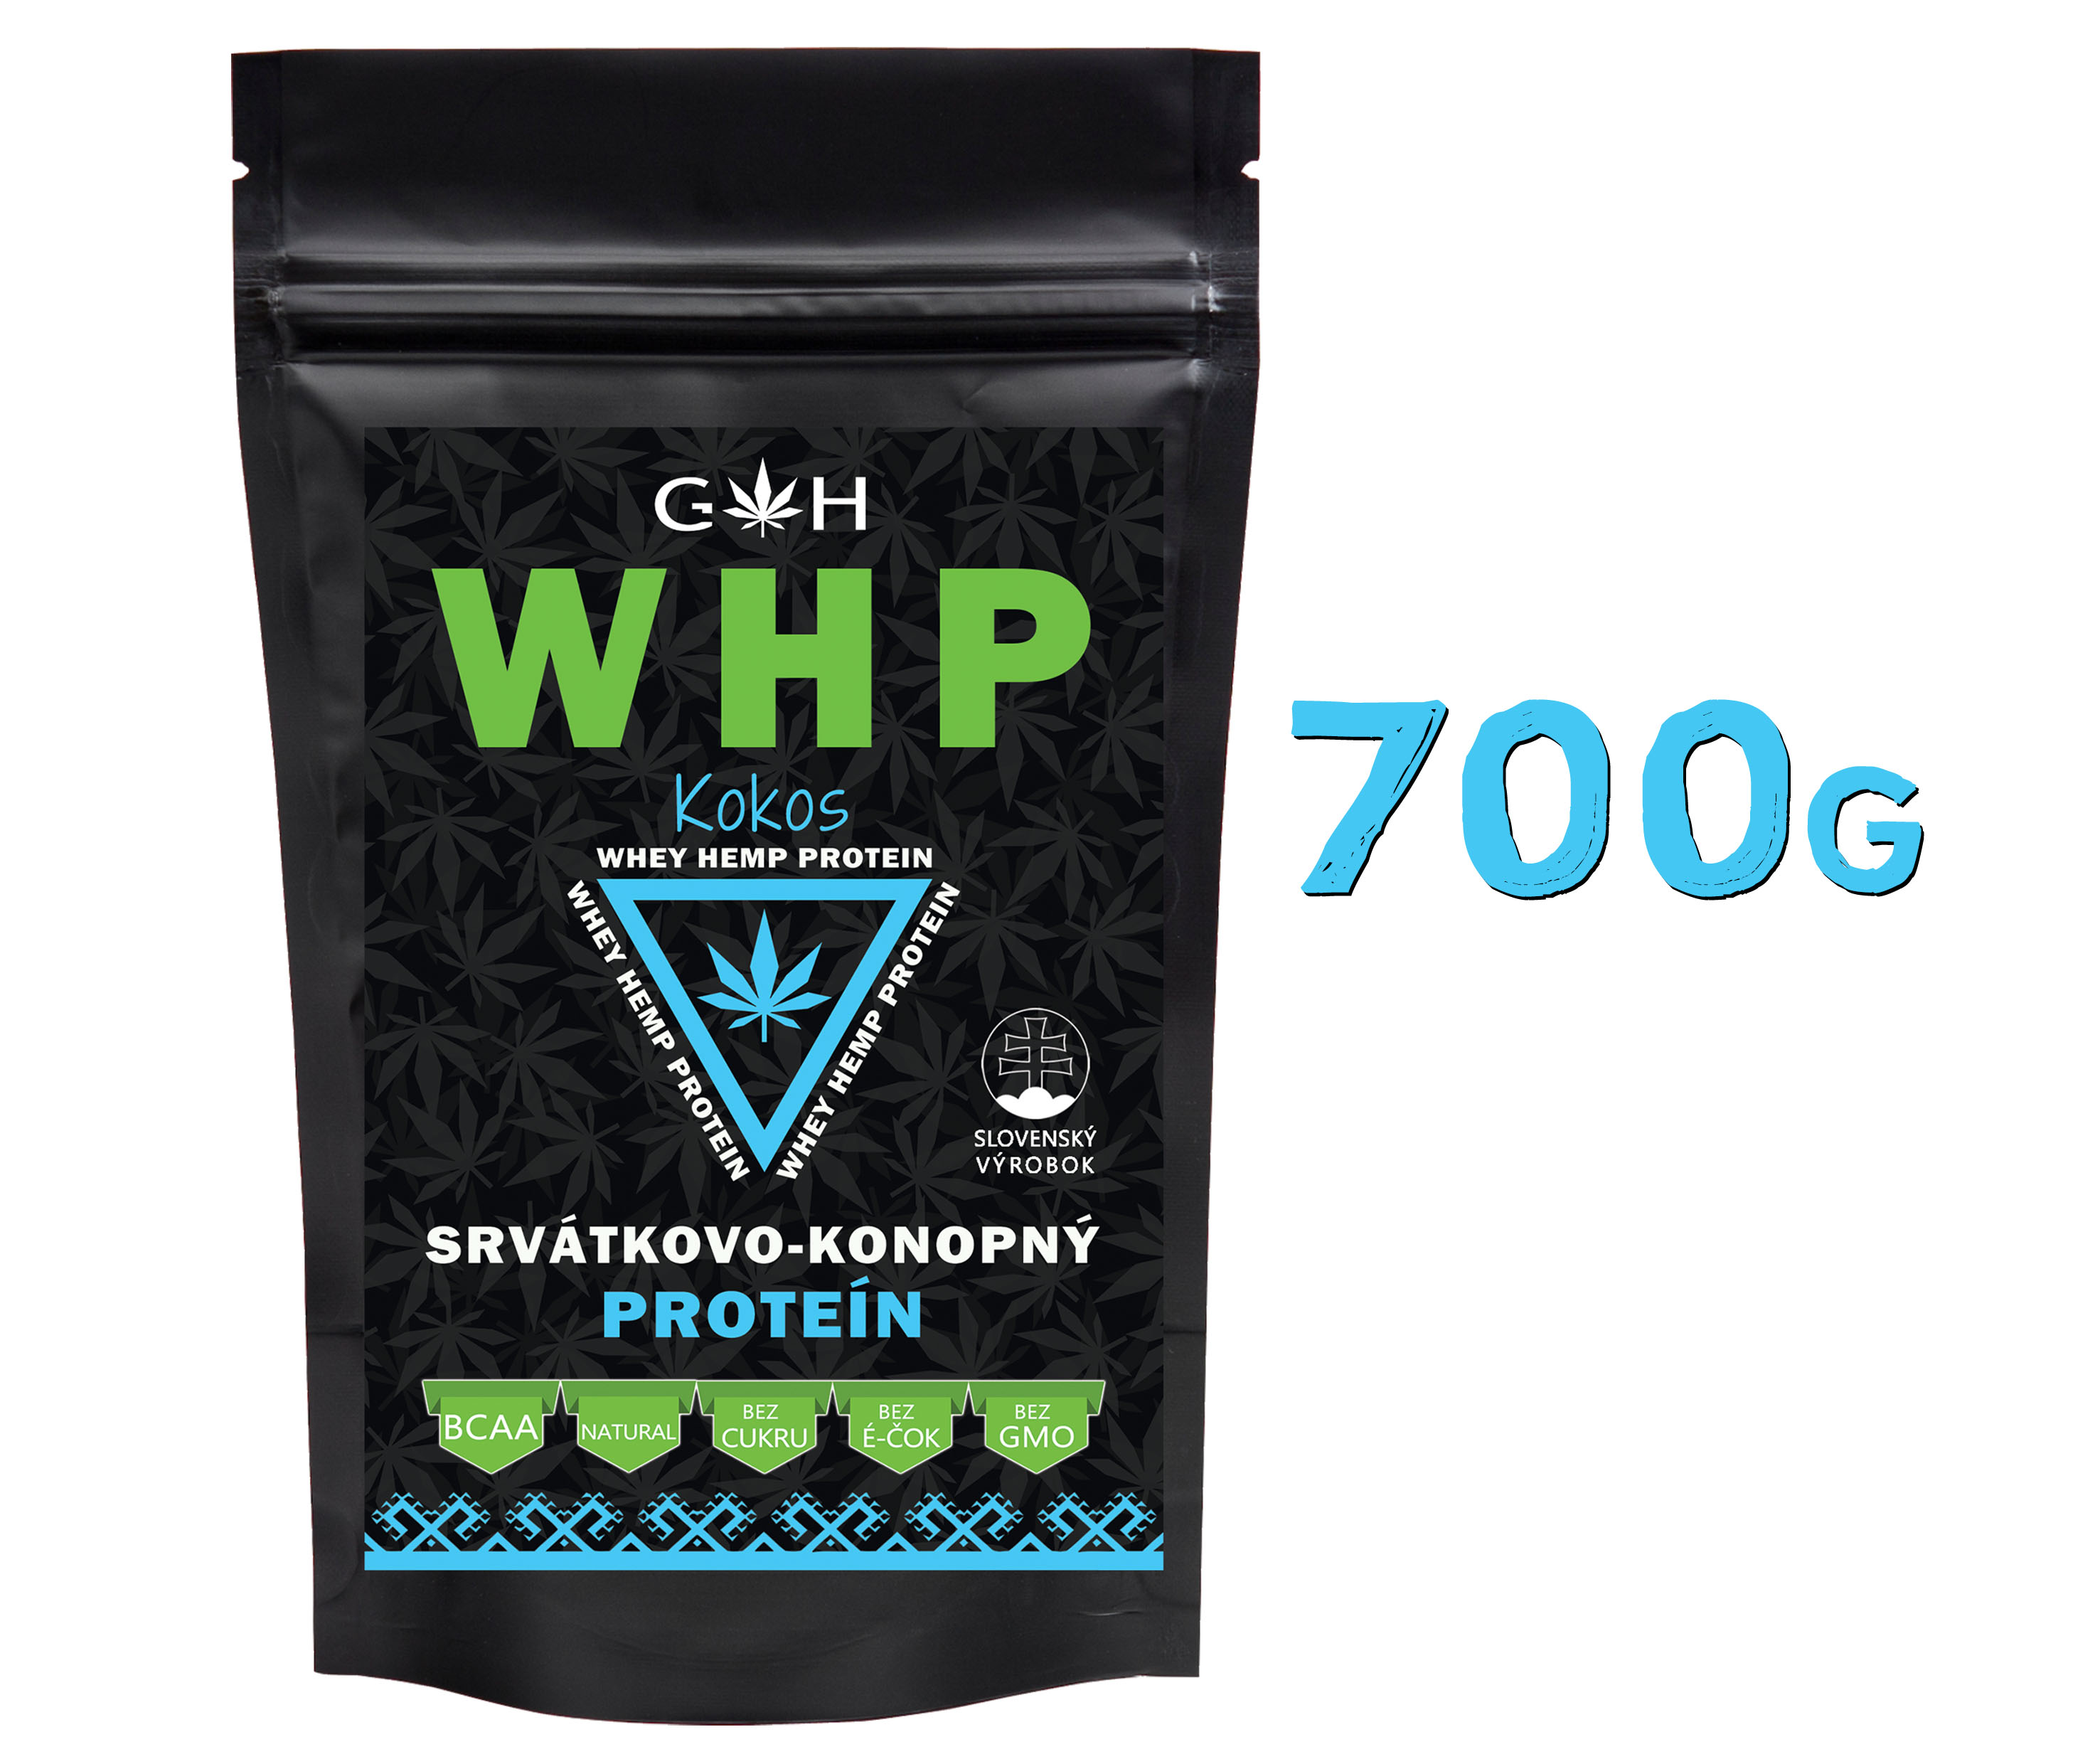 WHP proteín / kokos 700g